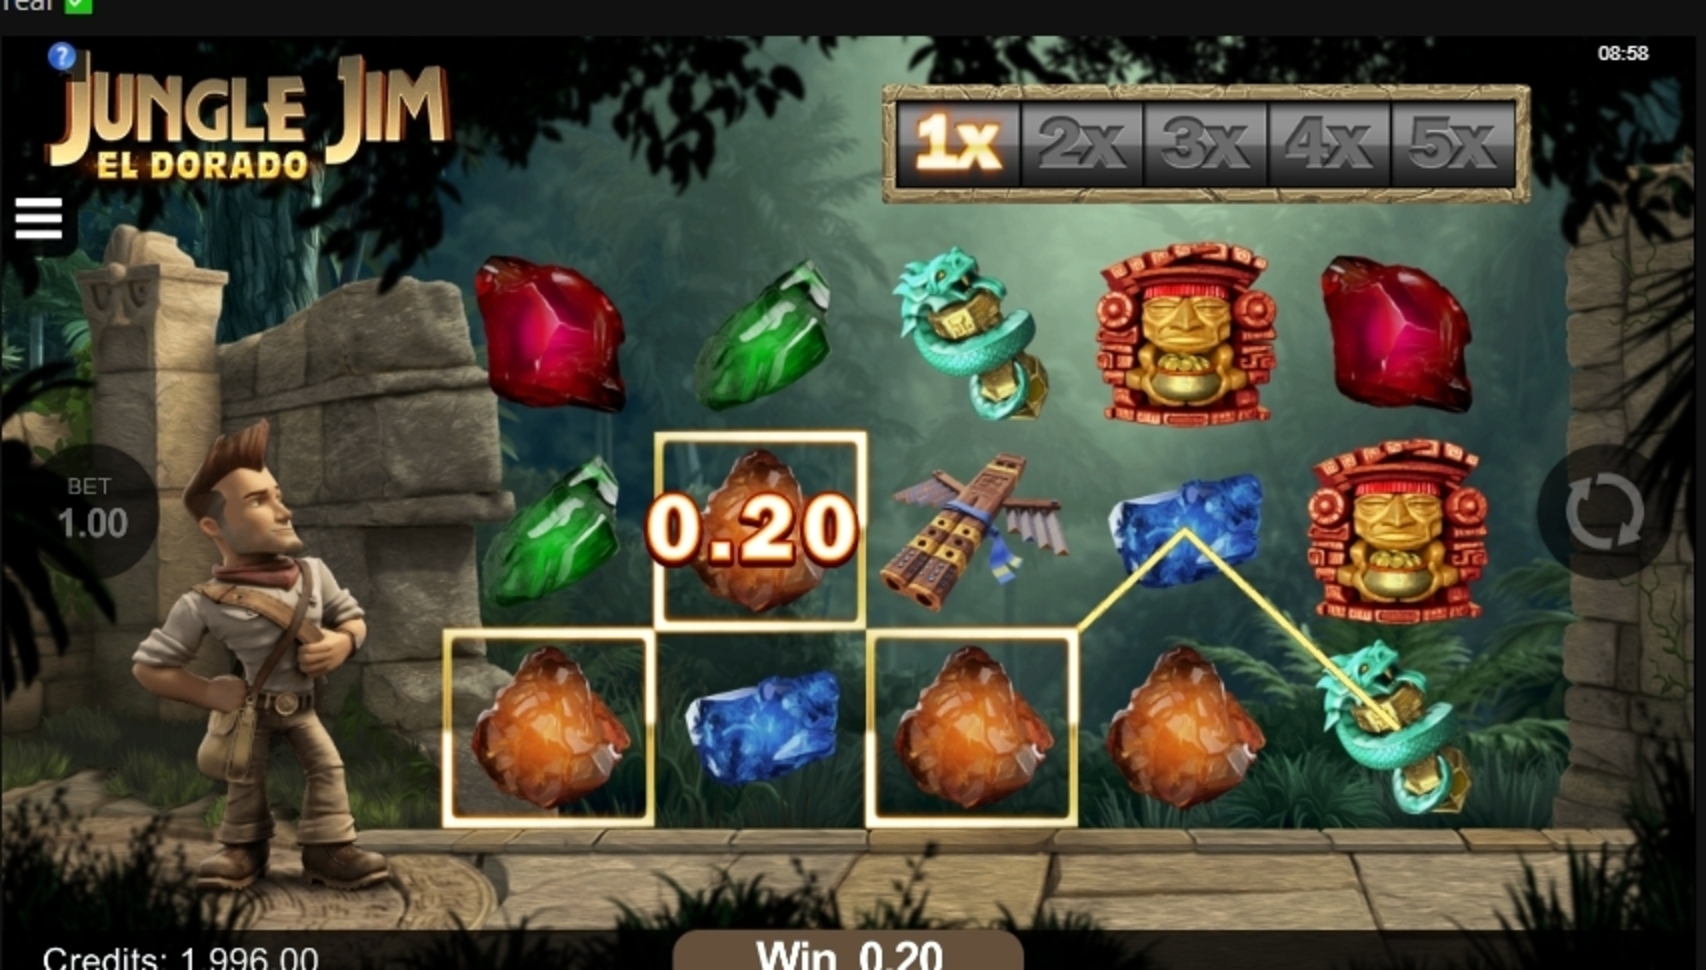 Win Money in Jungle Jim El Dorado Free Slot Game by Microgaming